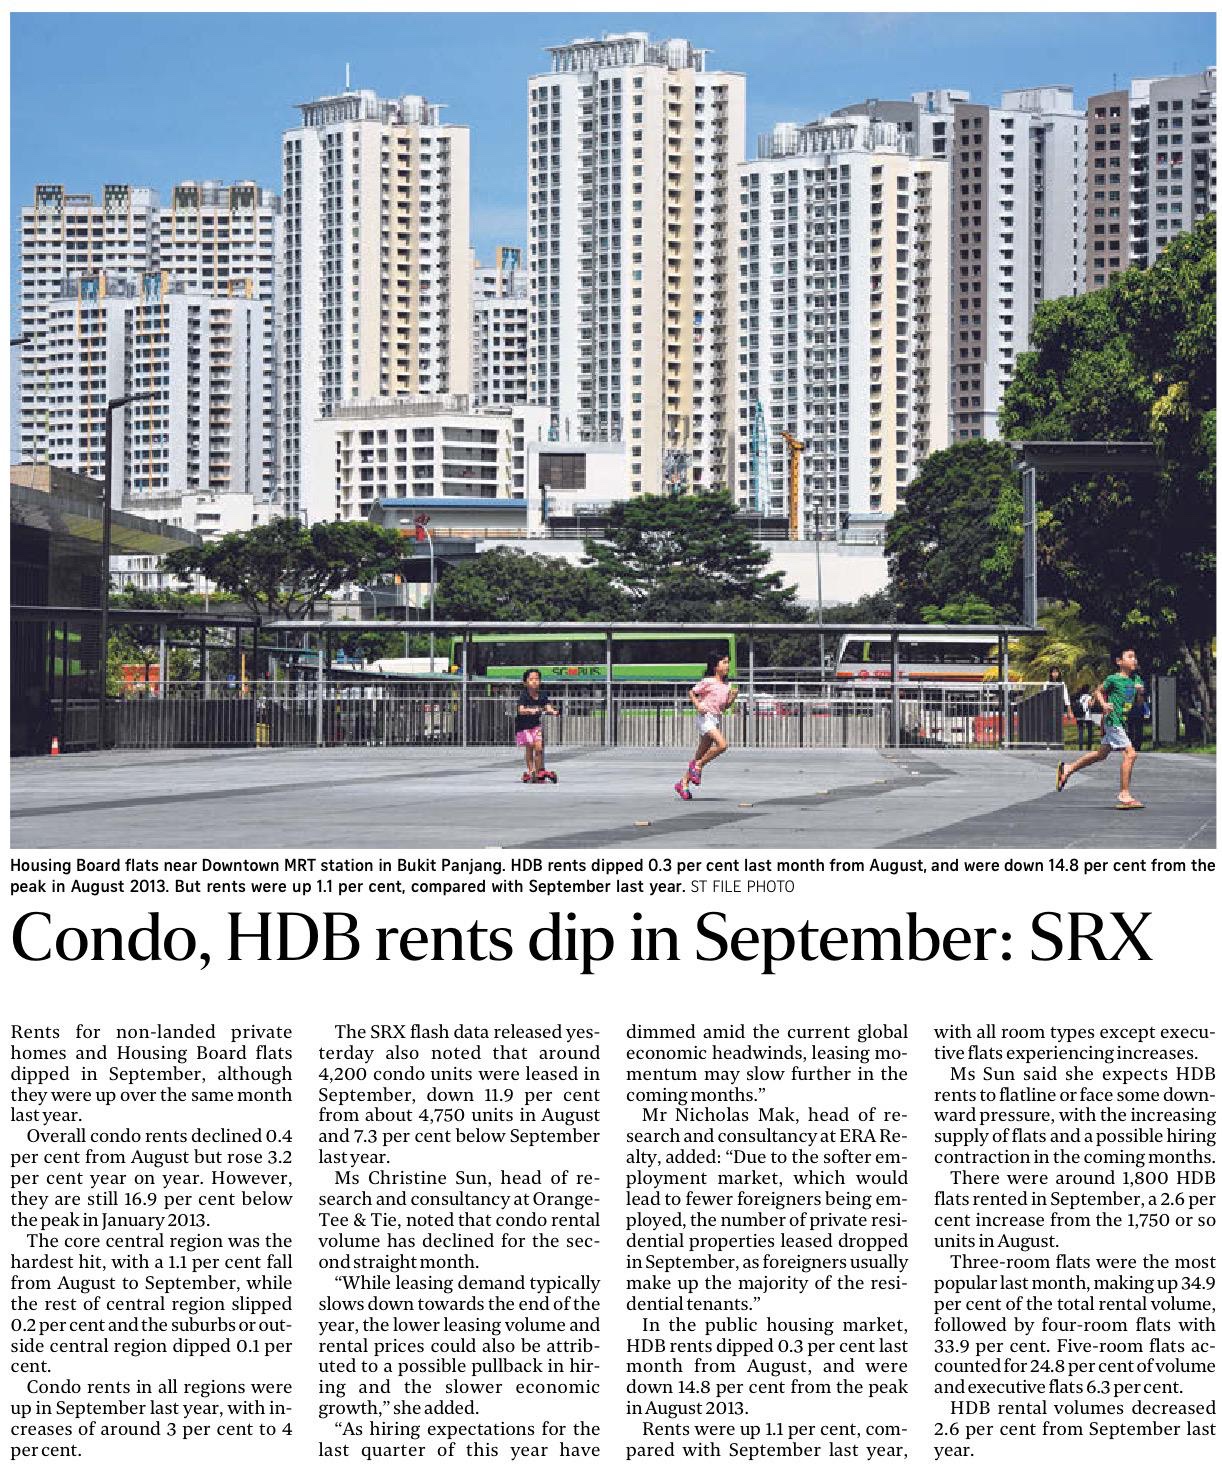 Condo, HDB rents dip in September: SRX